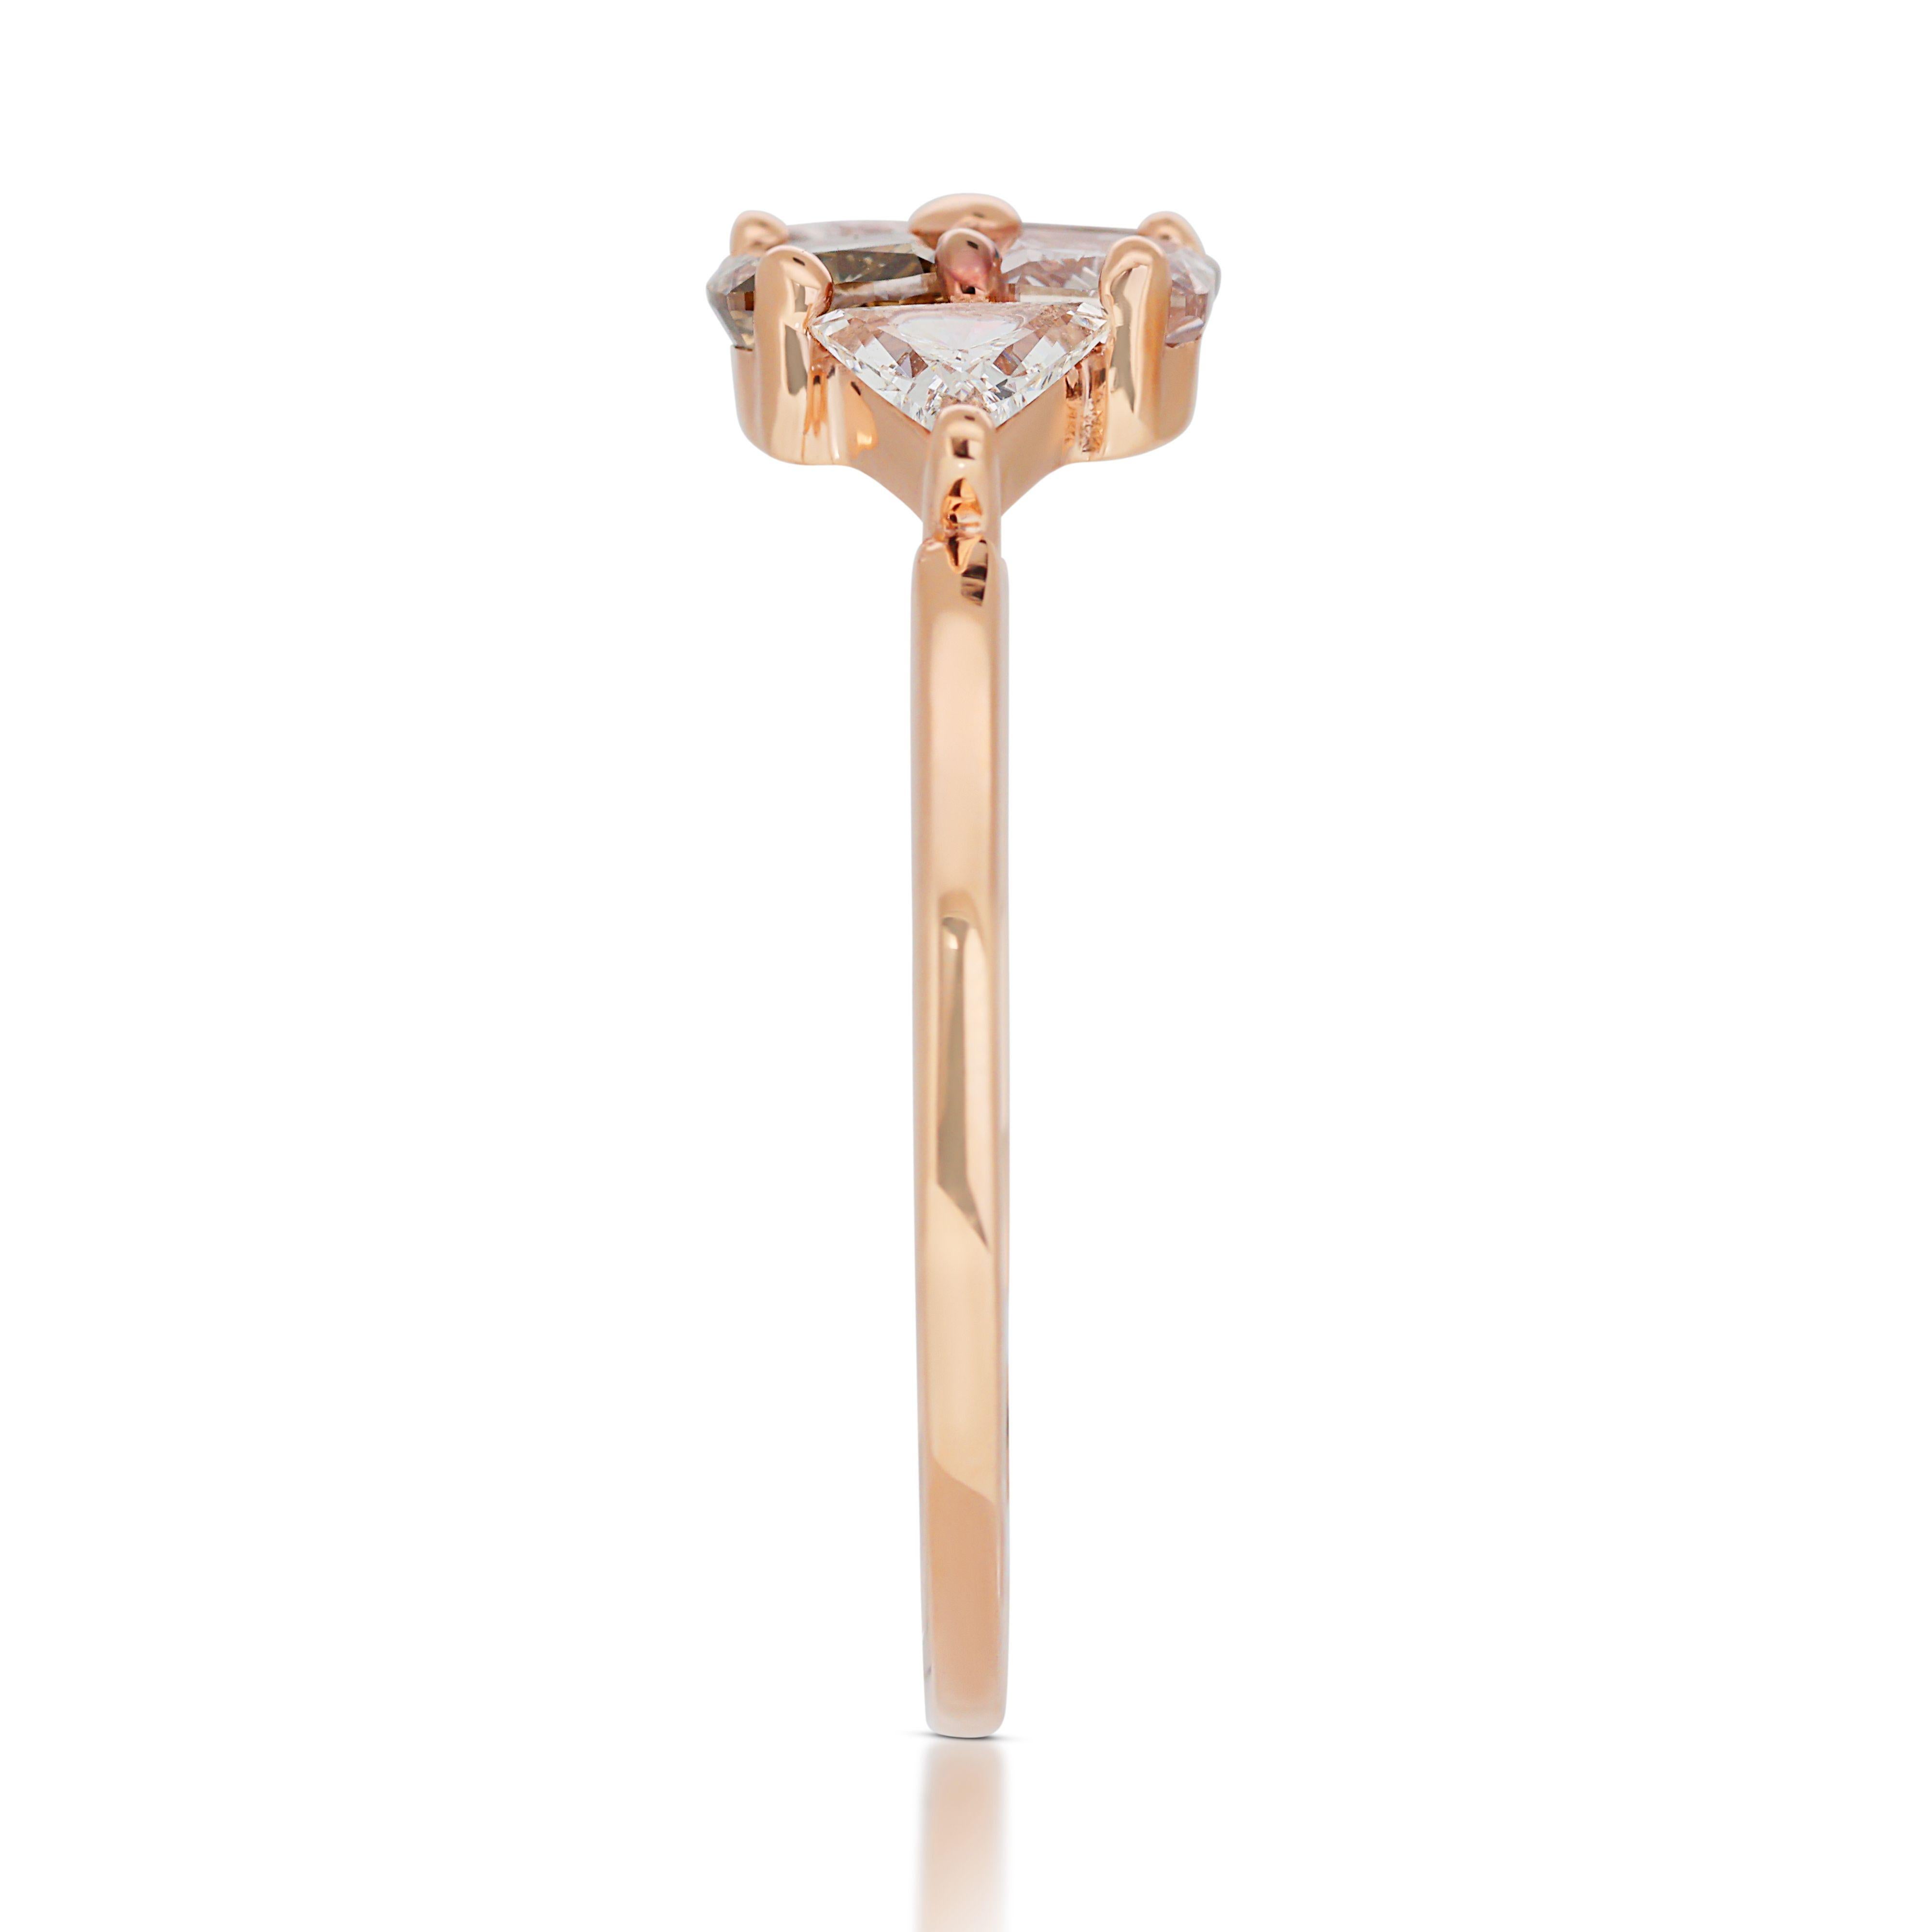 Cushion Cut Elegant 14k Rose Gold Multi-Color Ring with 1.16 Ct Natural Diamonds, NGI Cert For Sale